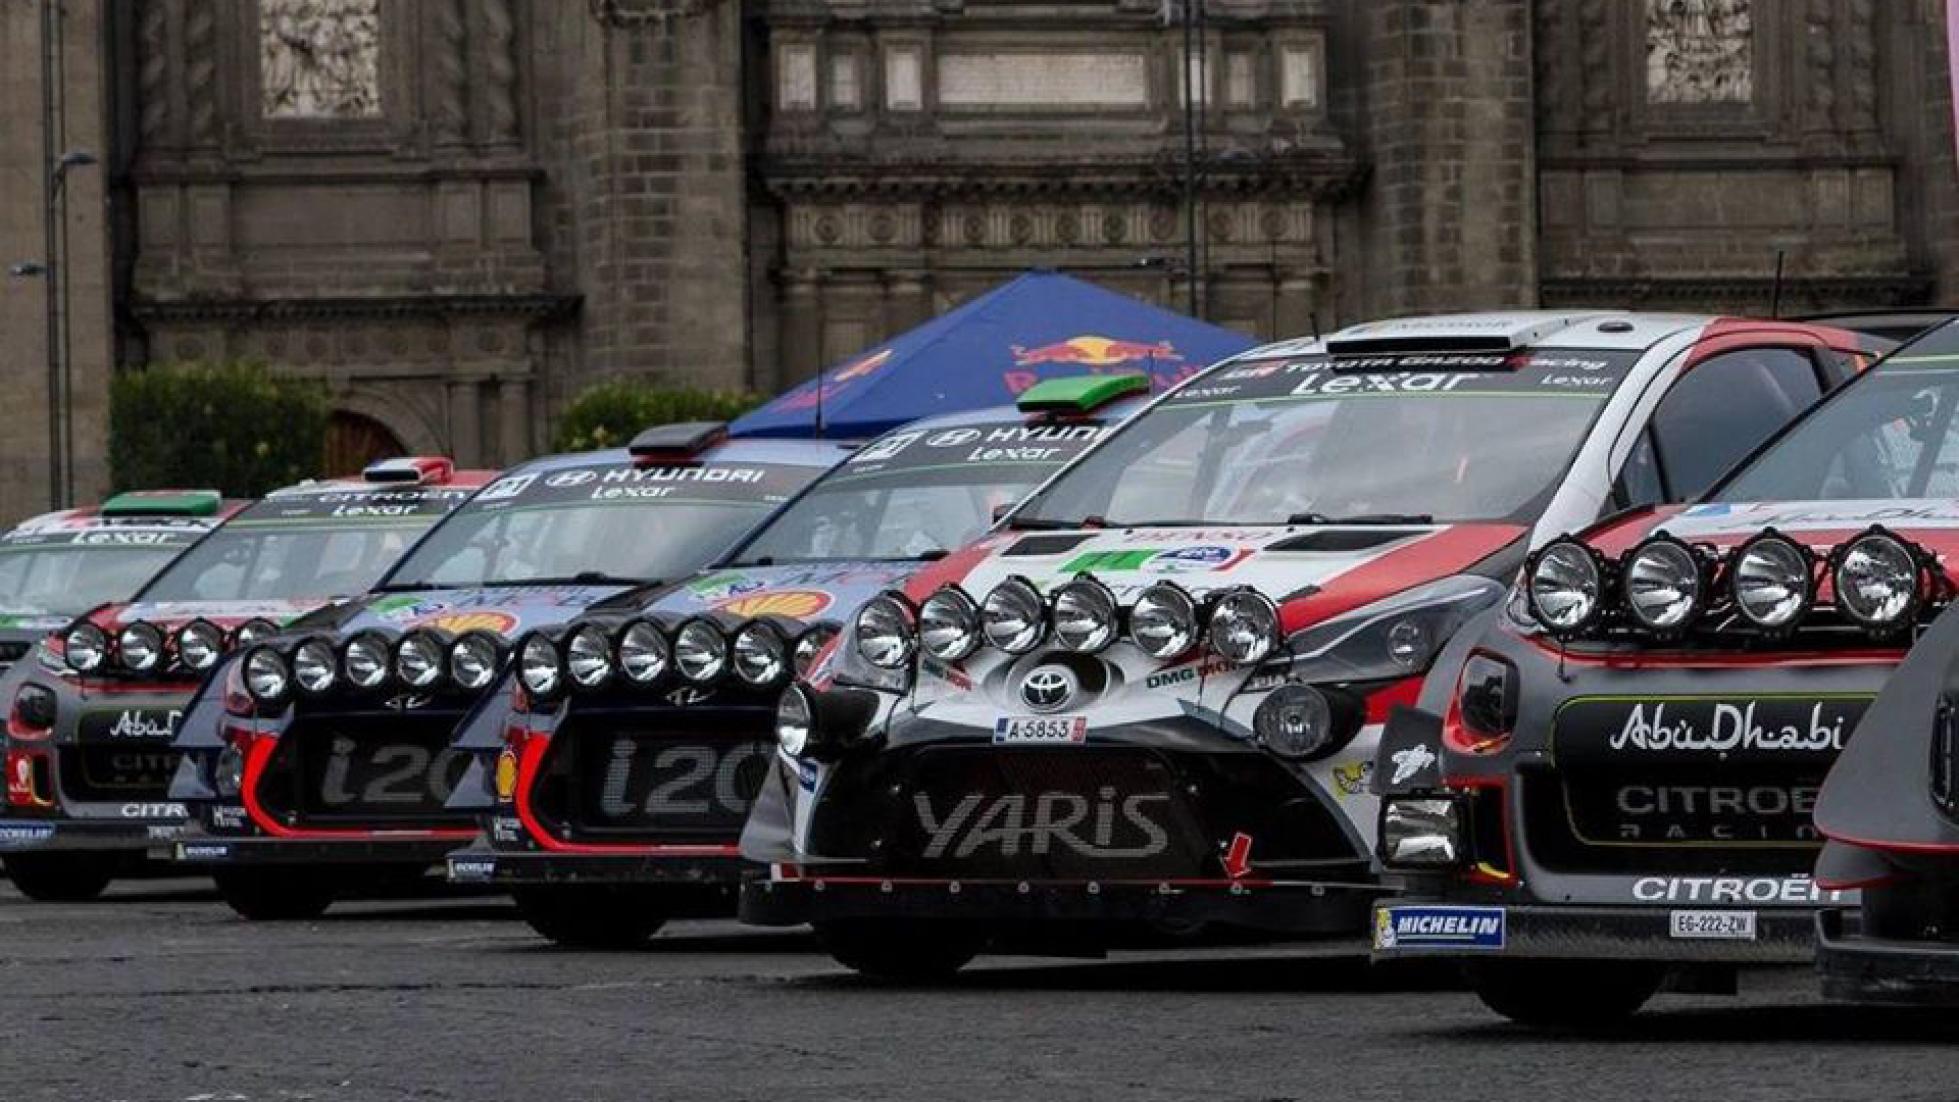 9. All modern WRC cars